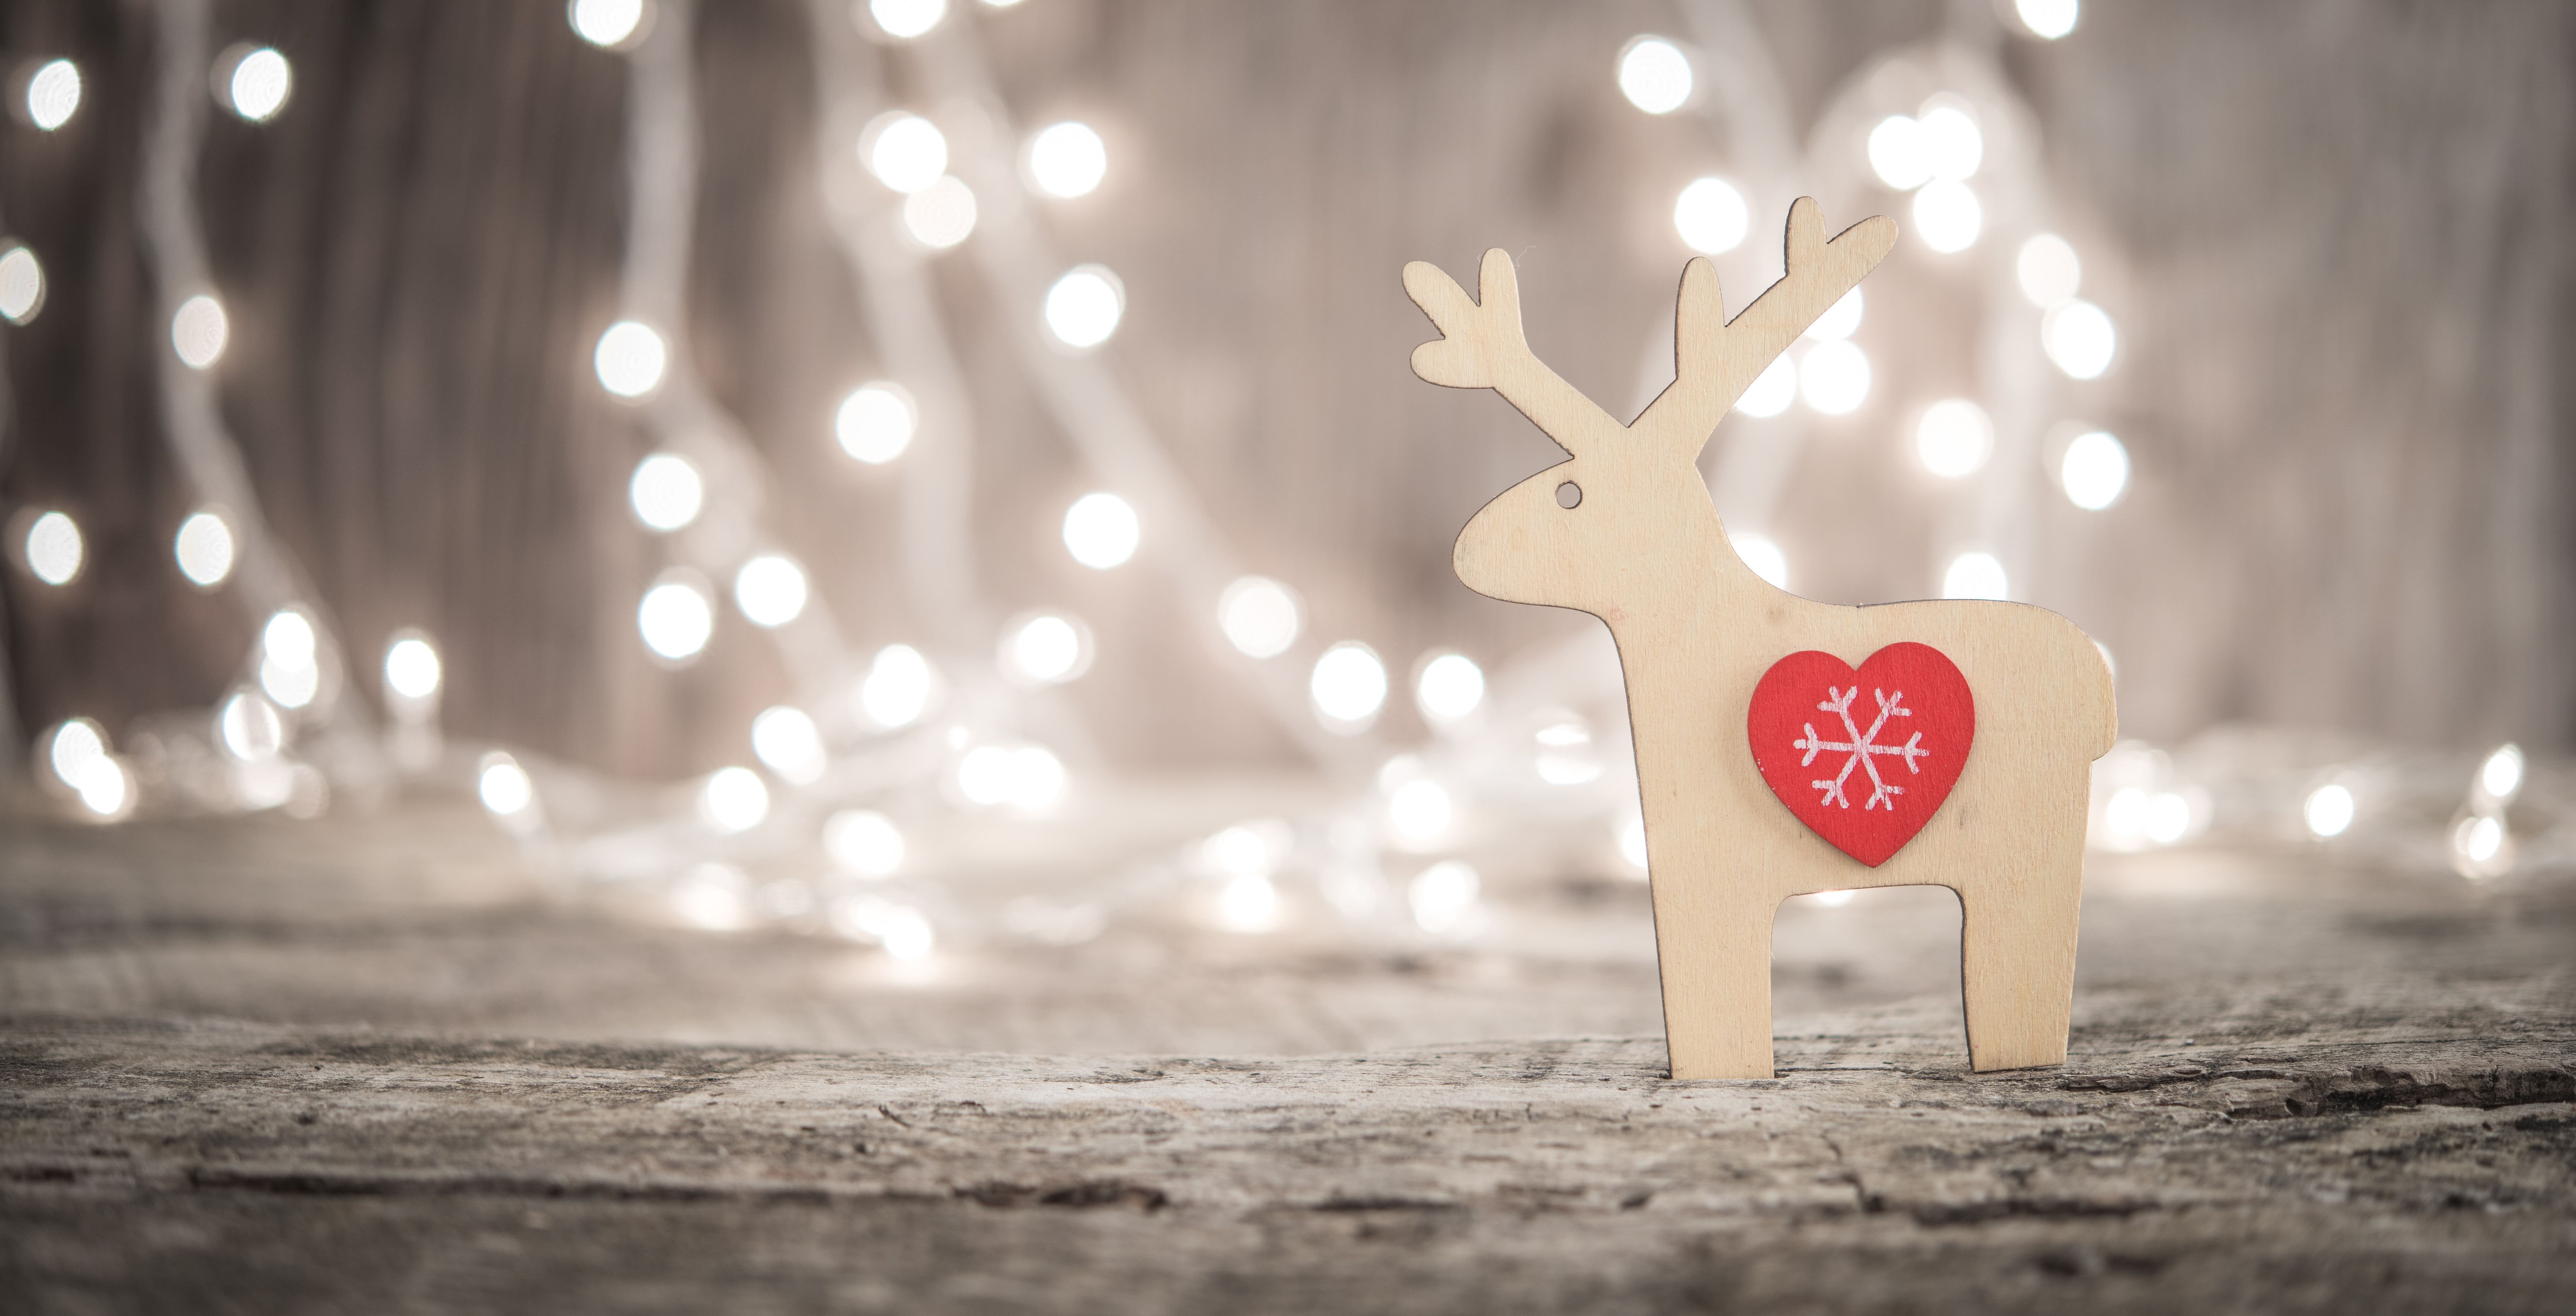 Raindeer ornament and bokeh lights during the Christmas season. | Source: Shutterstock